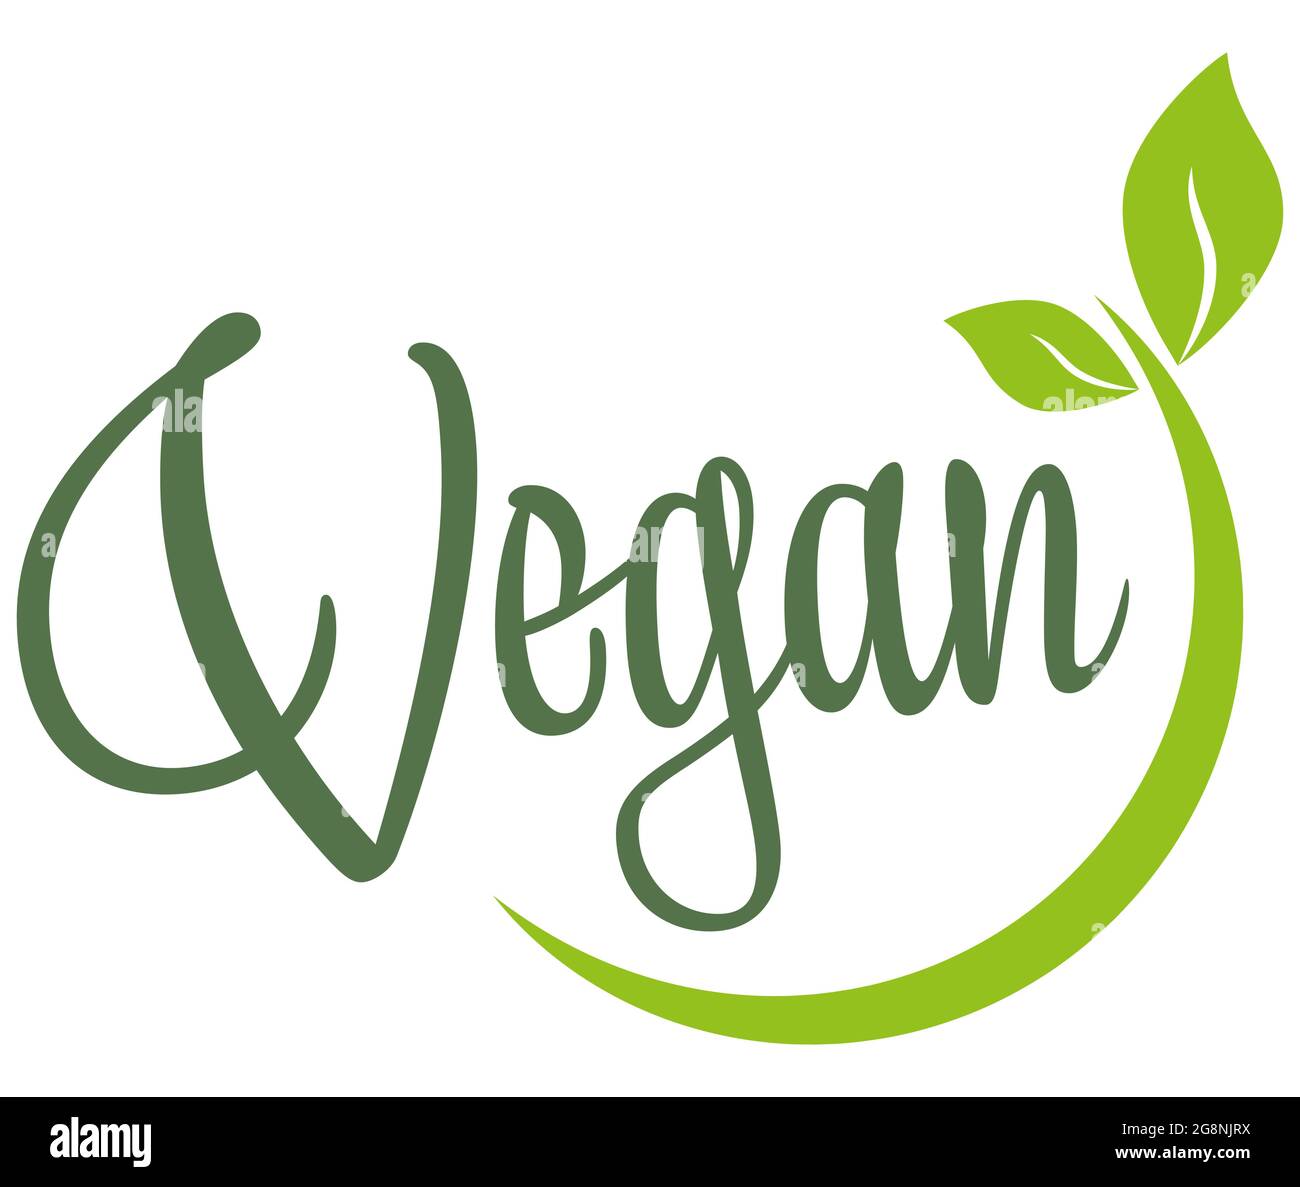 eps-Vektordatei moderner grüner runder Stempel mit Blättern, Text vegan Stock Vektor